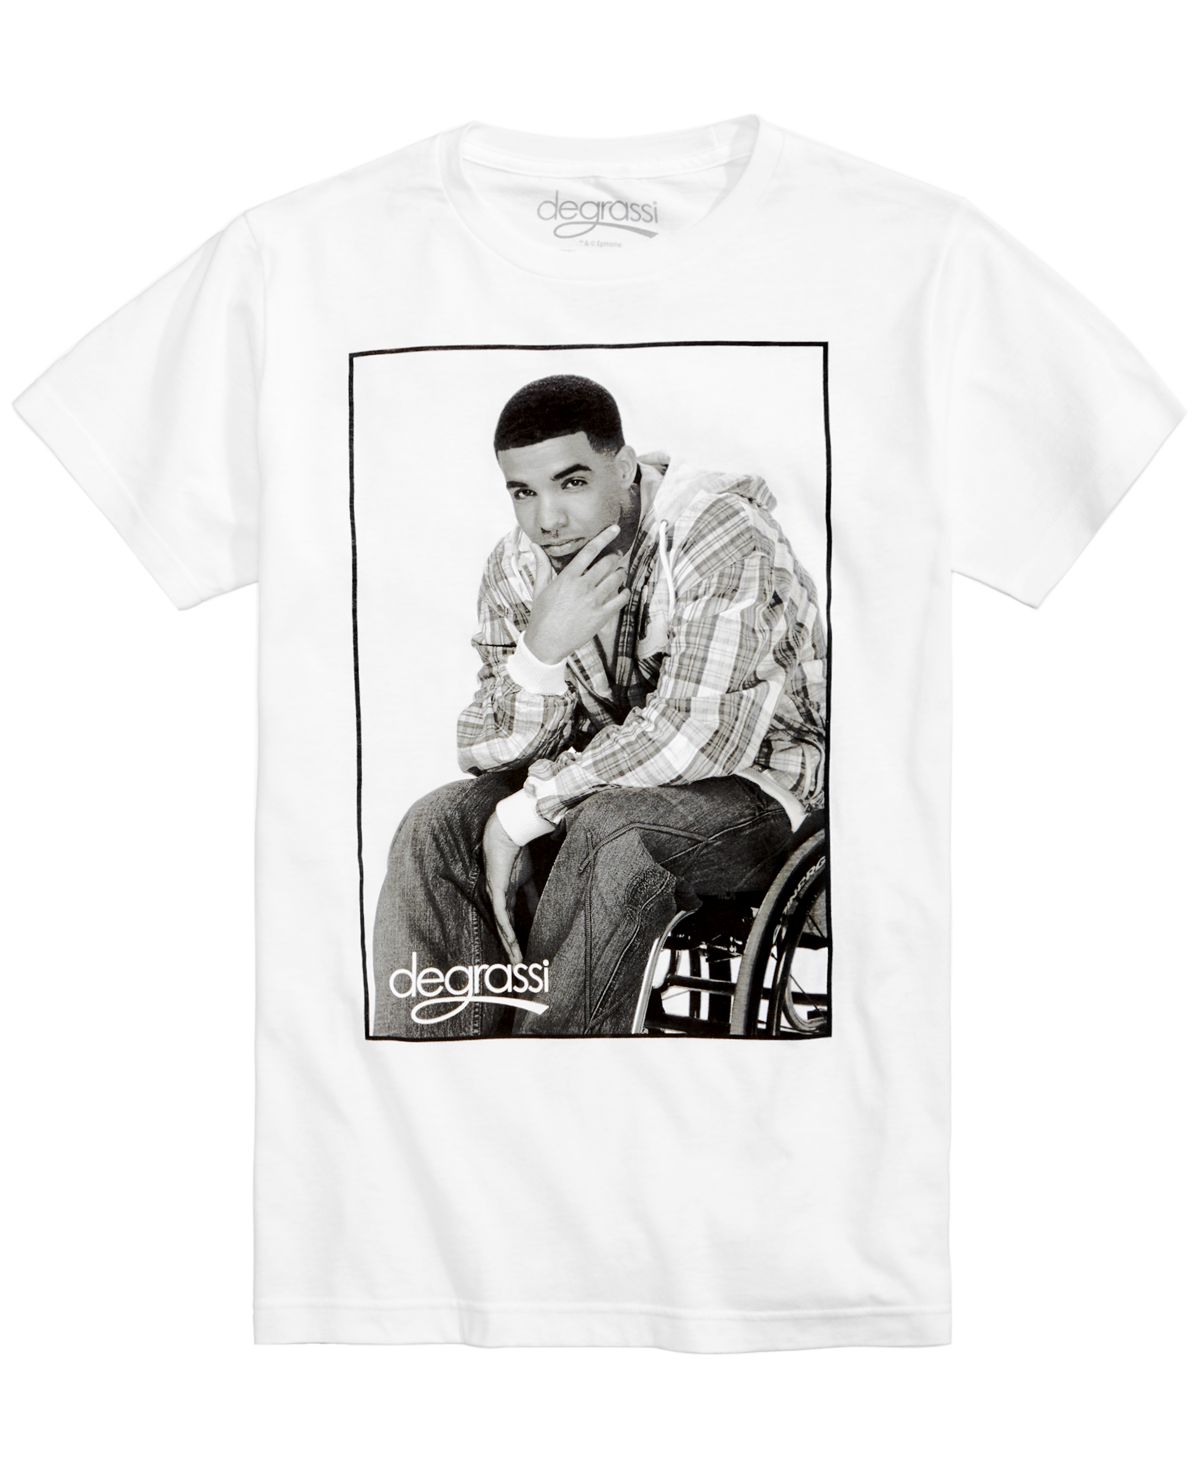 Macy's Men's Degrassi Jimmy Brooks Graphic-Print T-Shirt $4.99 ...